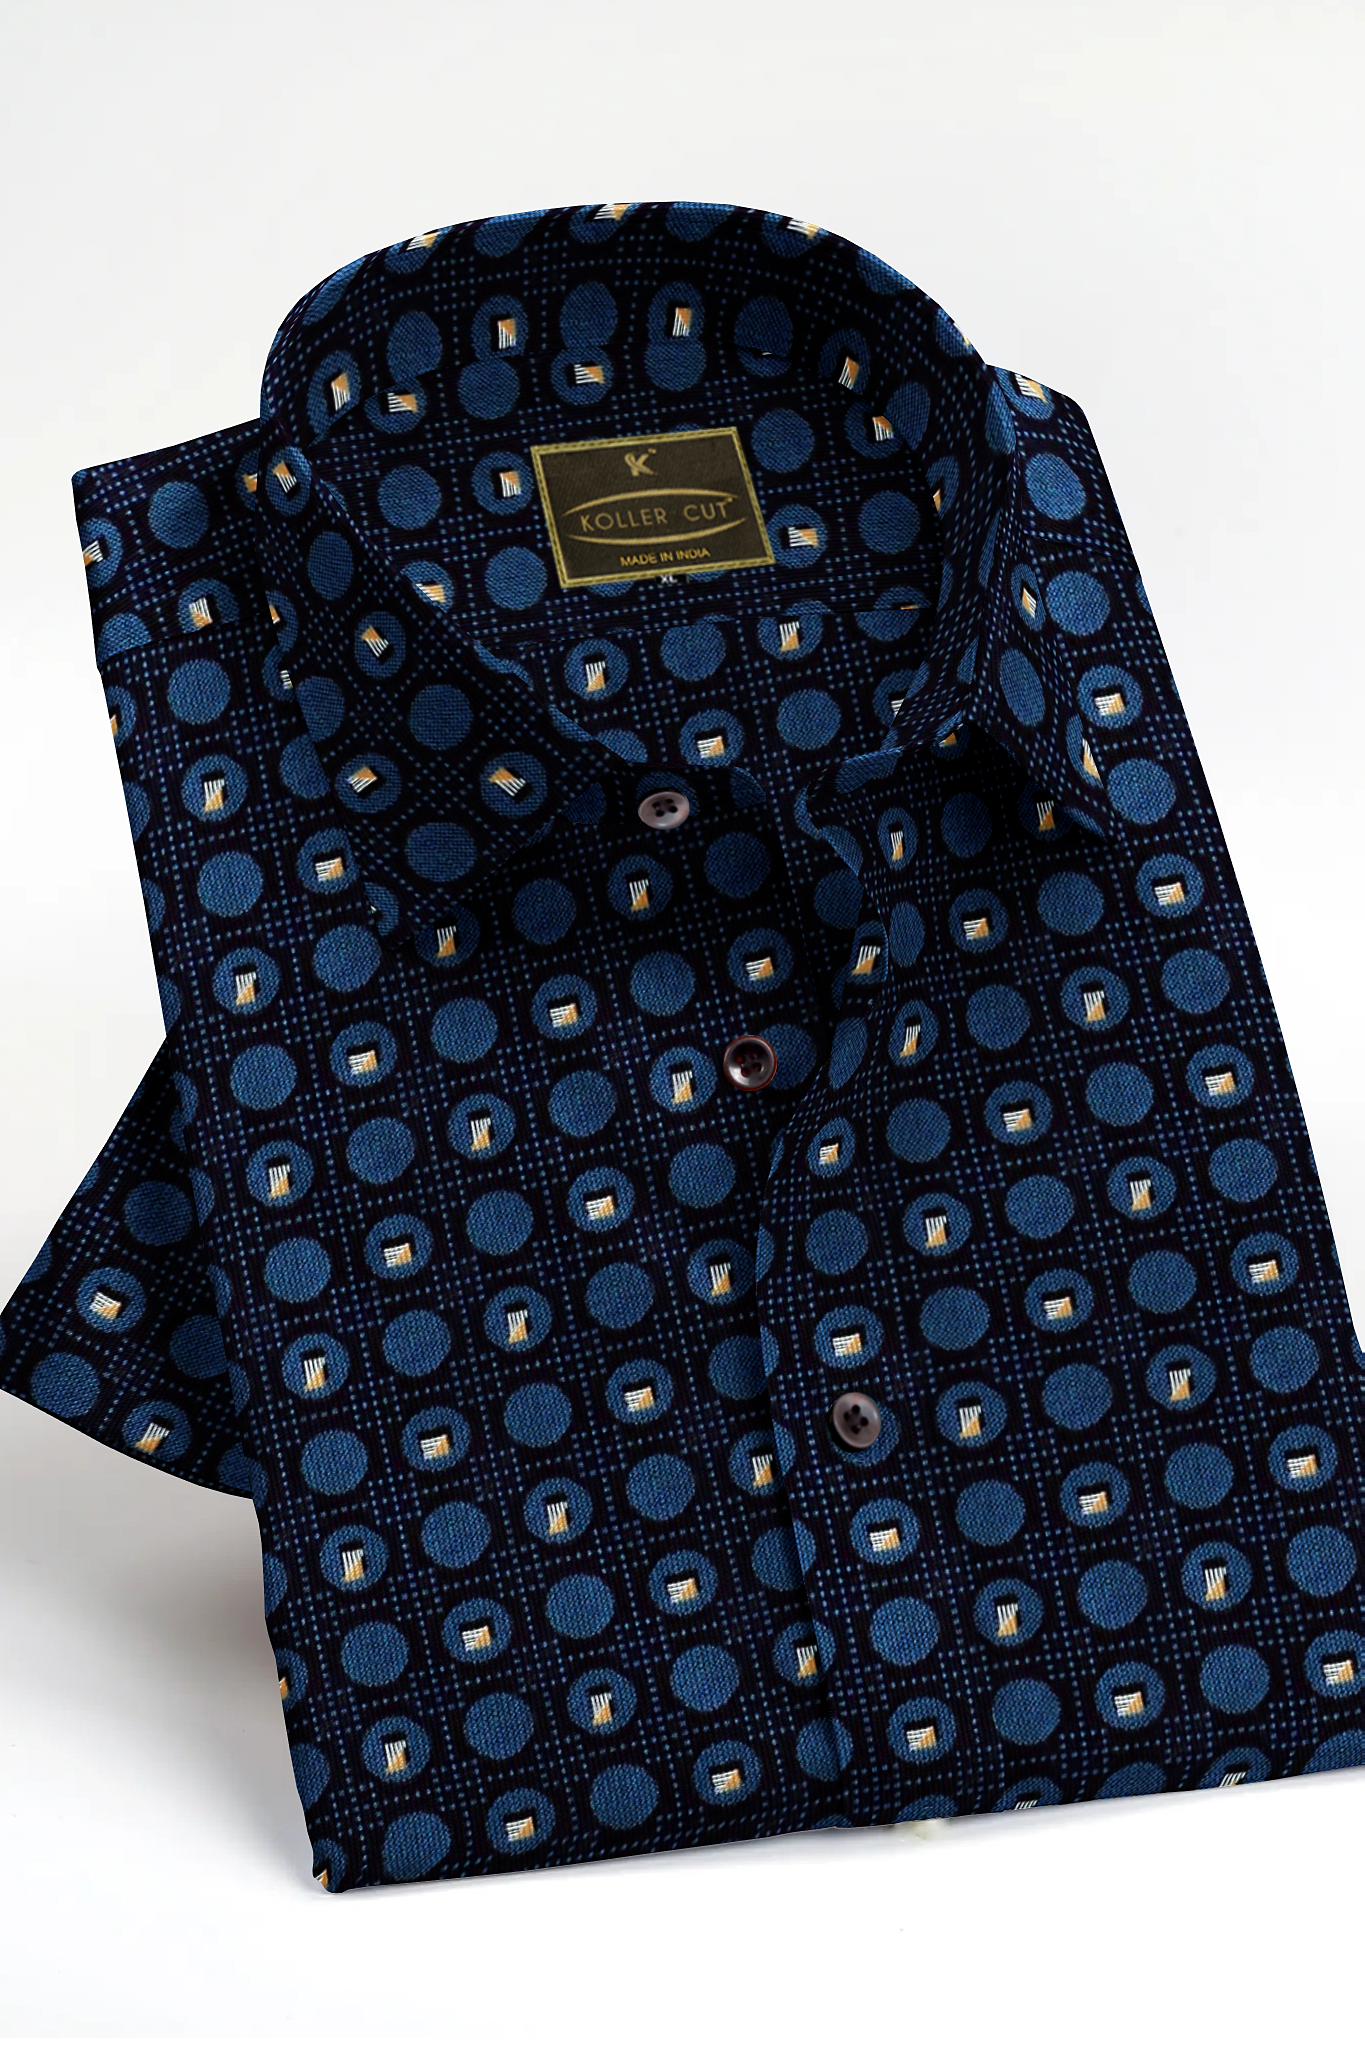 Blue Printed Textured Cotton Shirt